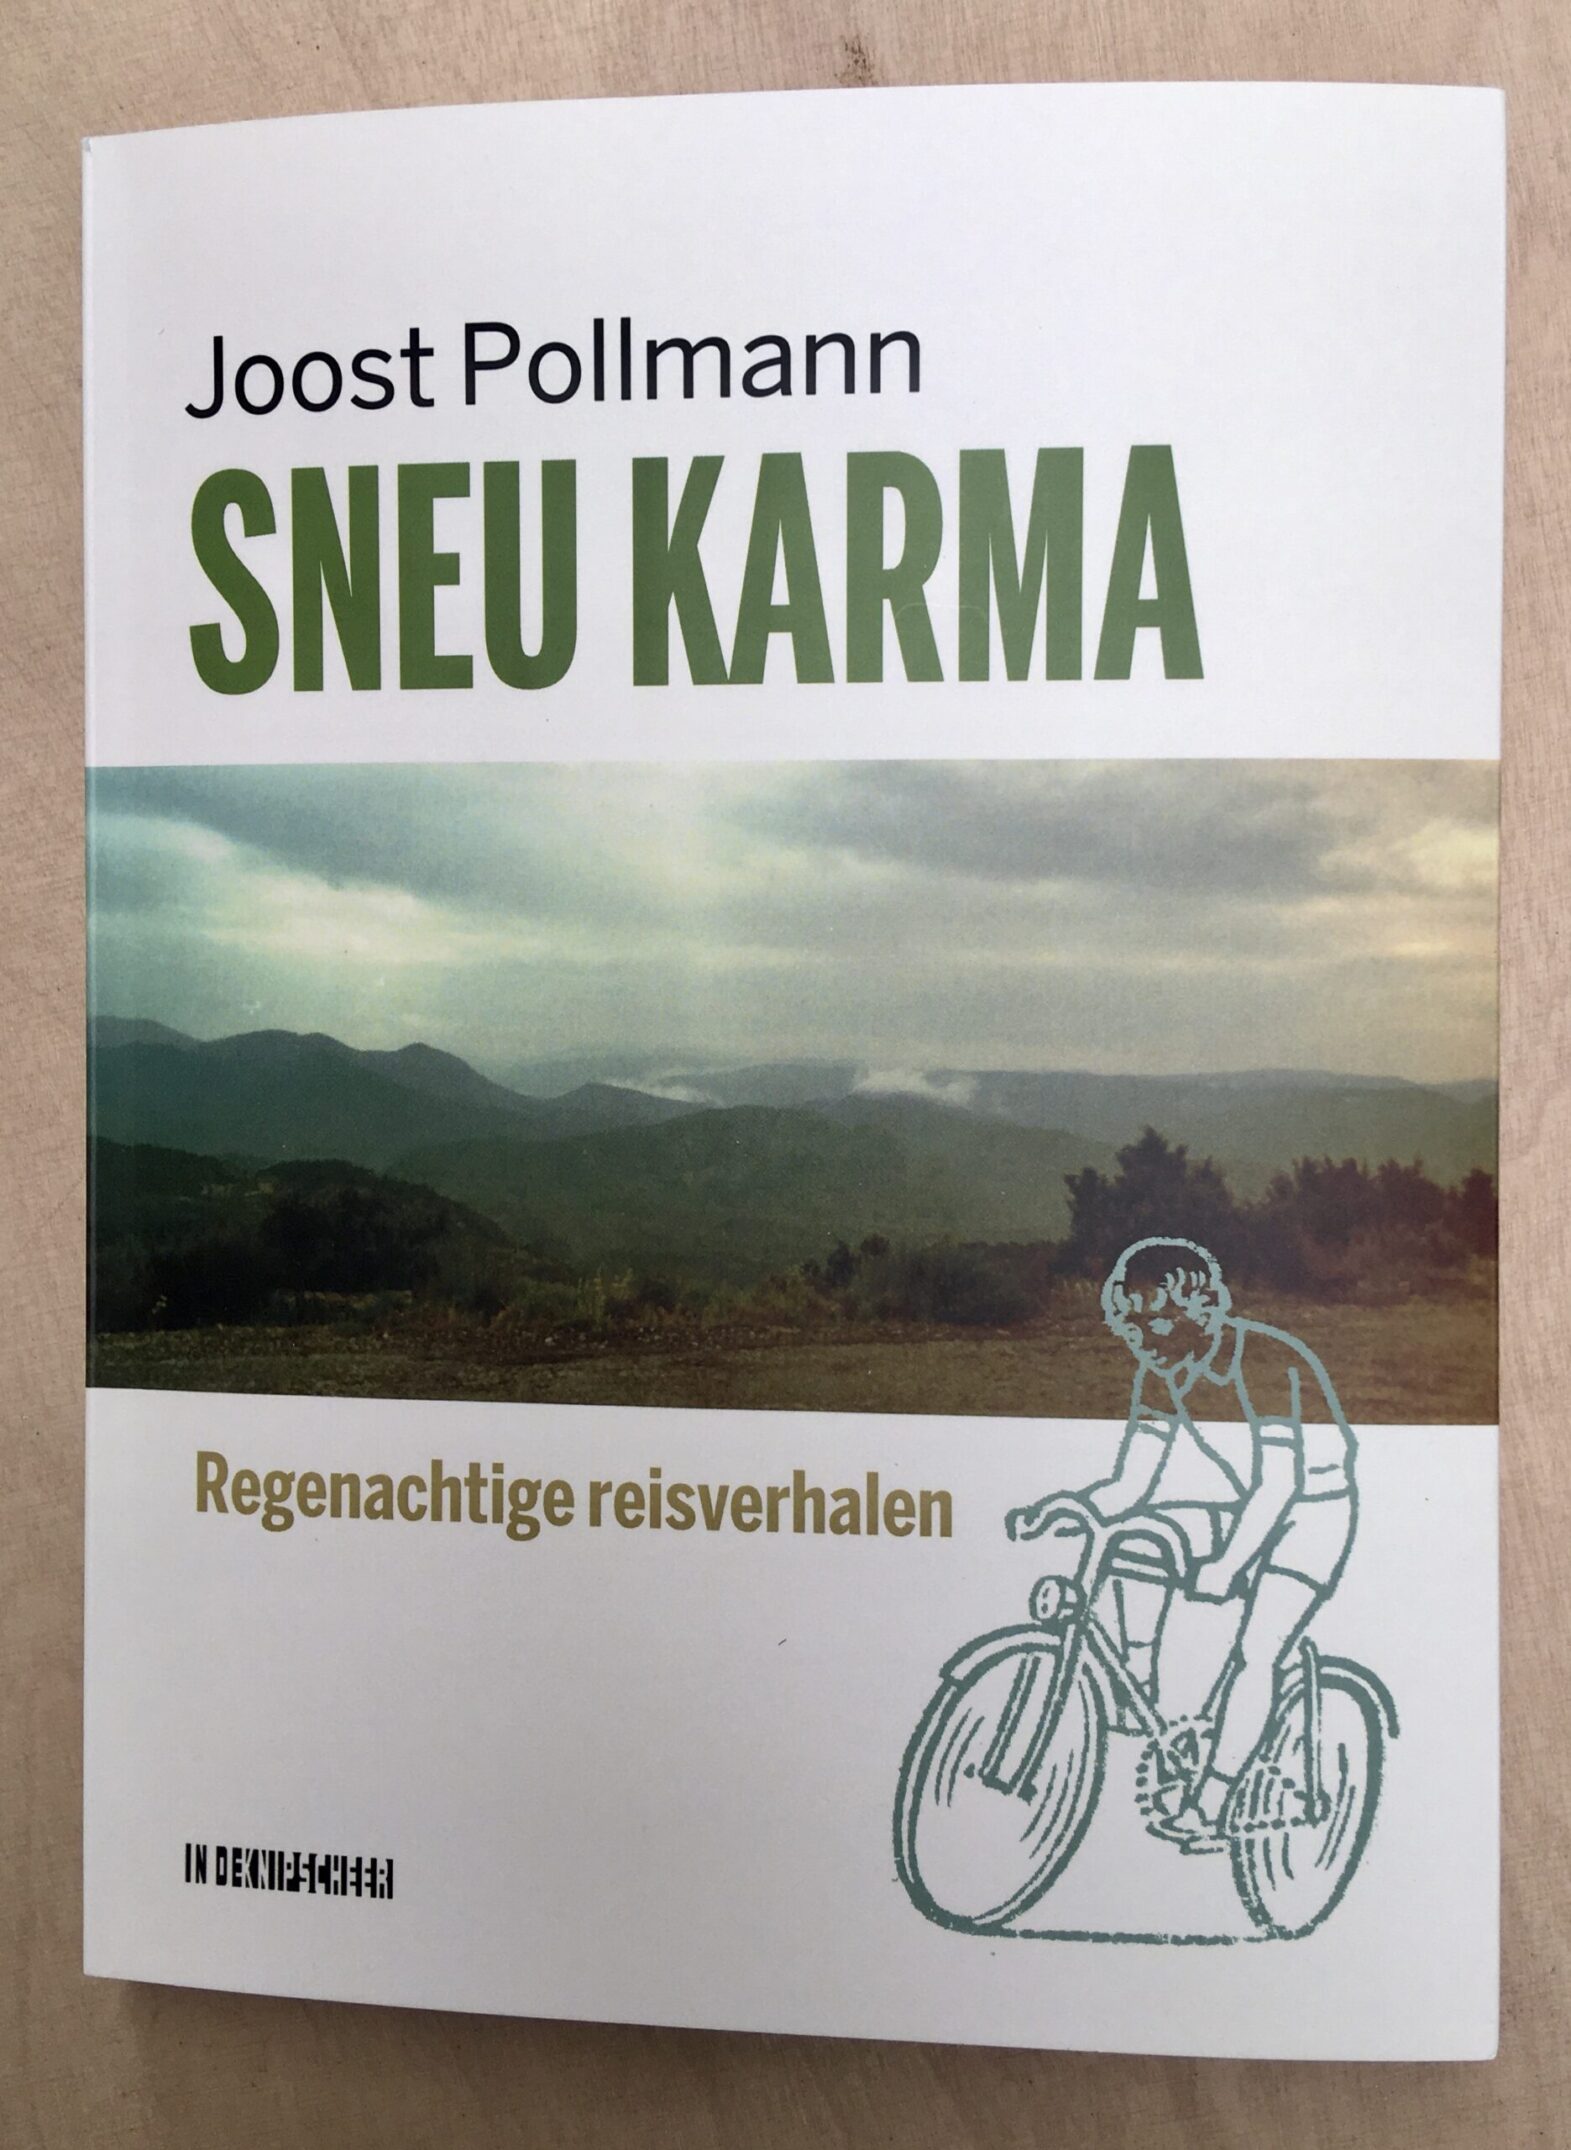 Sneu karma travel stories by Joost Pollman